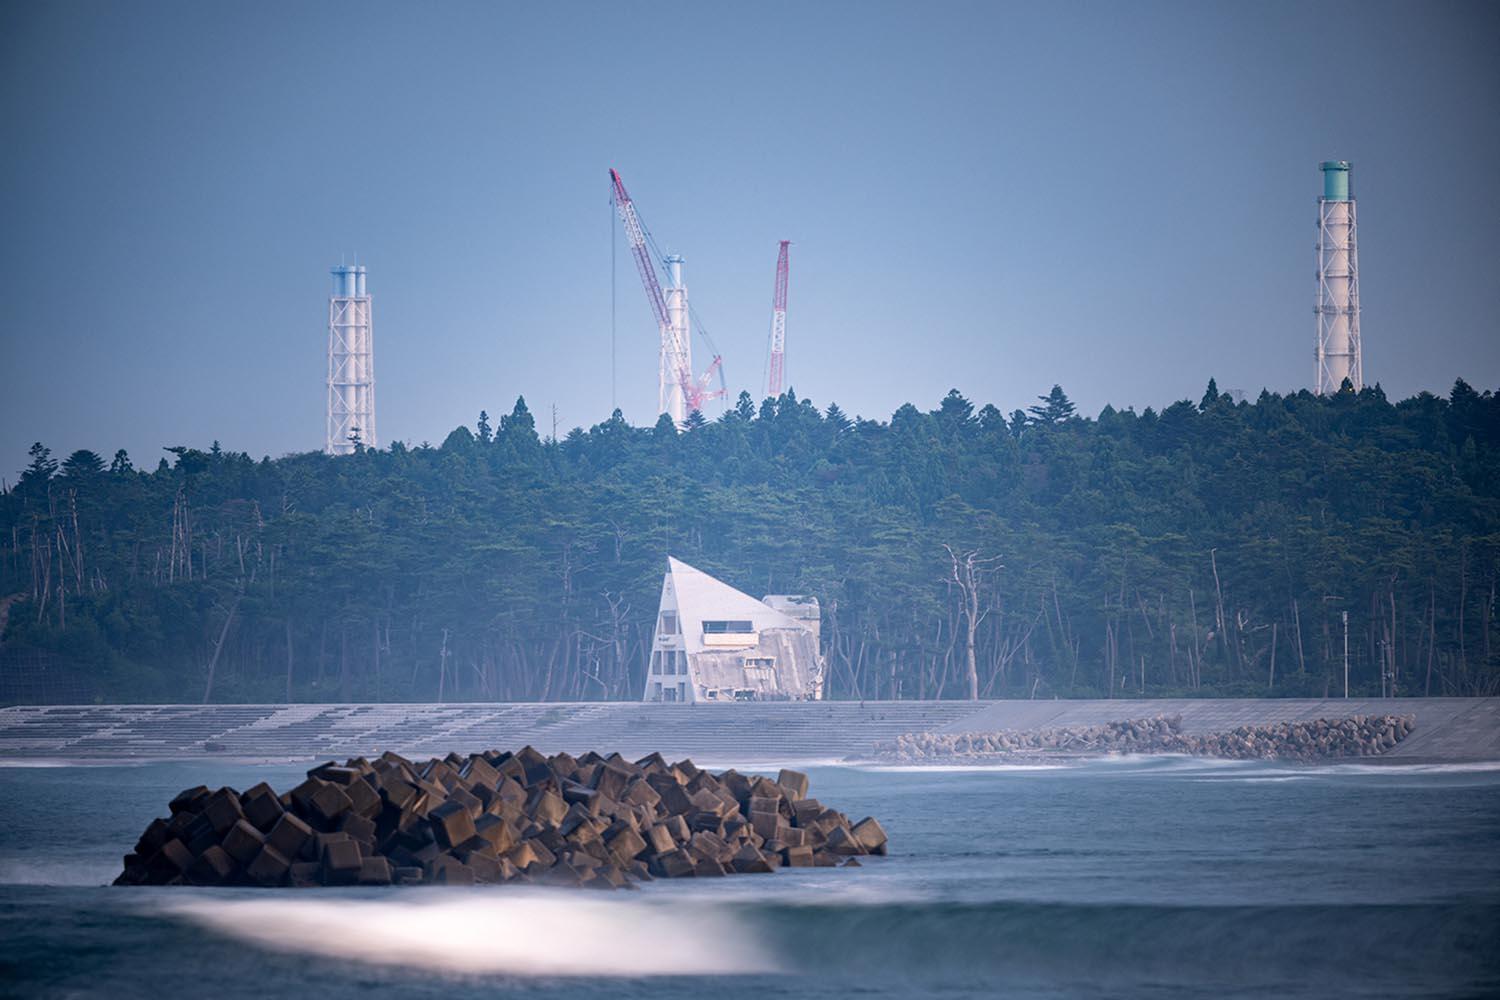 three-meter-tsunami-recorded-japan-nuclear-plant-quake-SPACEBAR-Hero.jpg